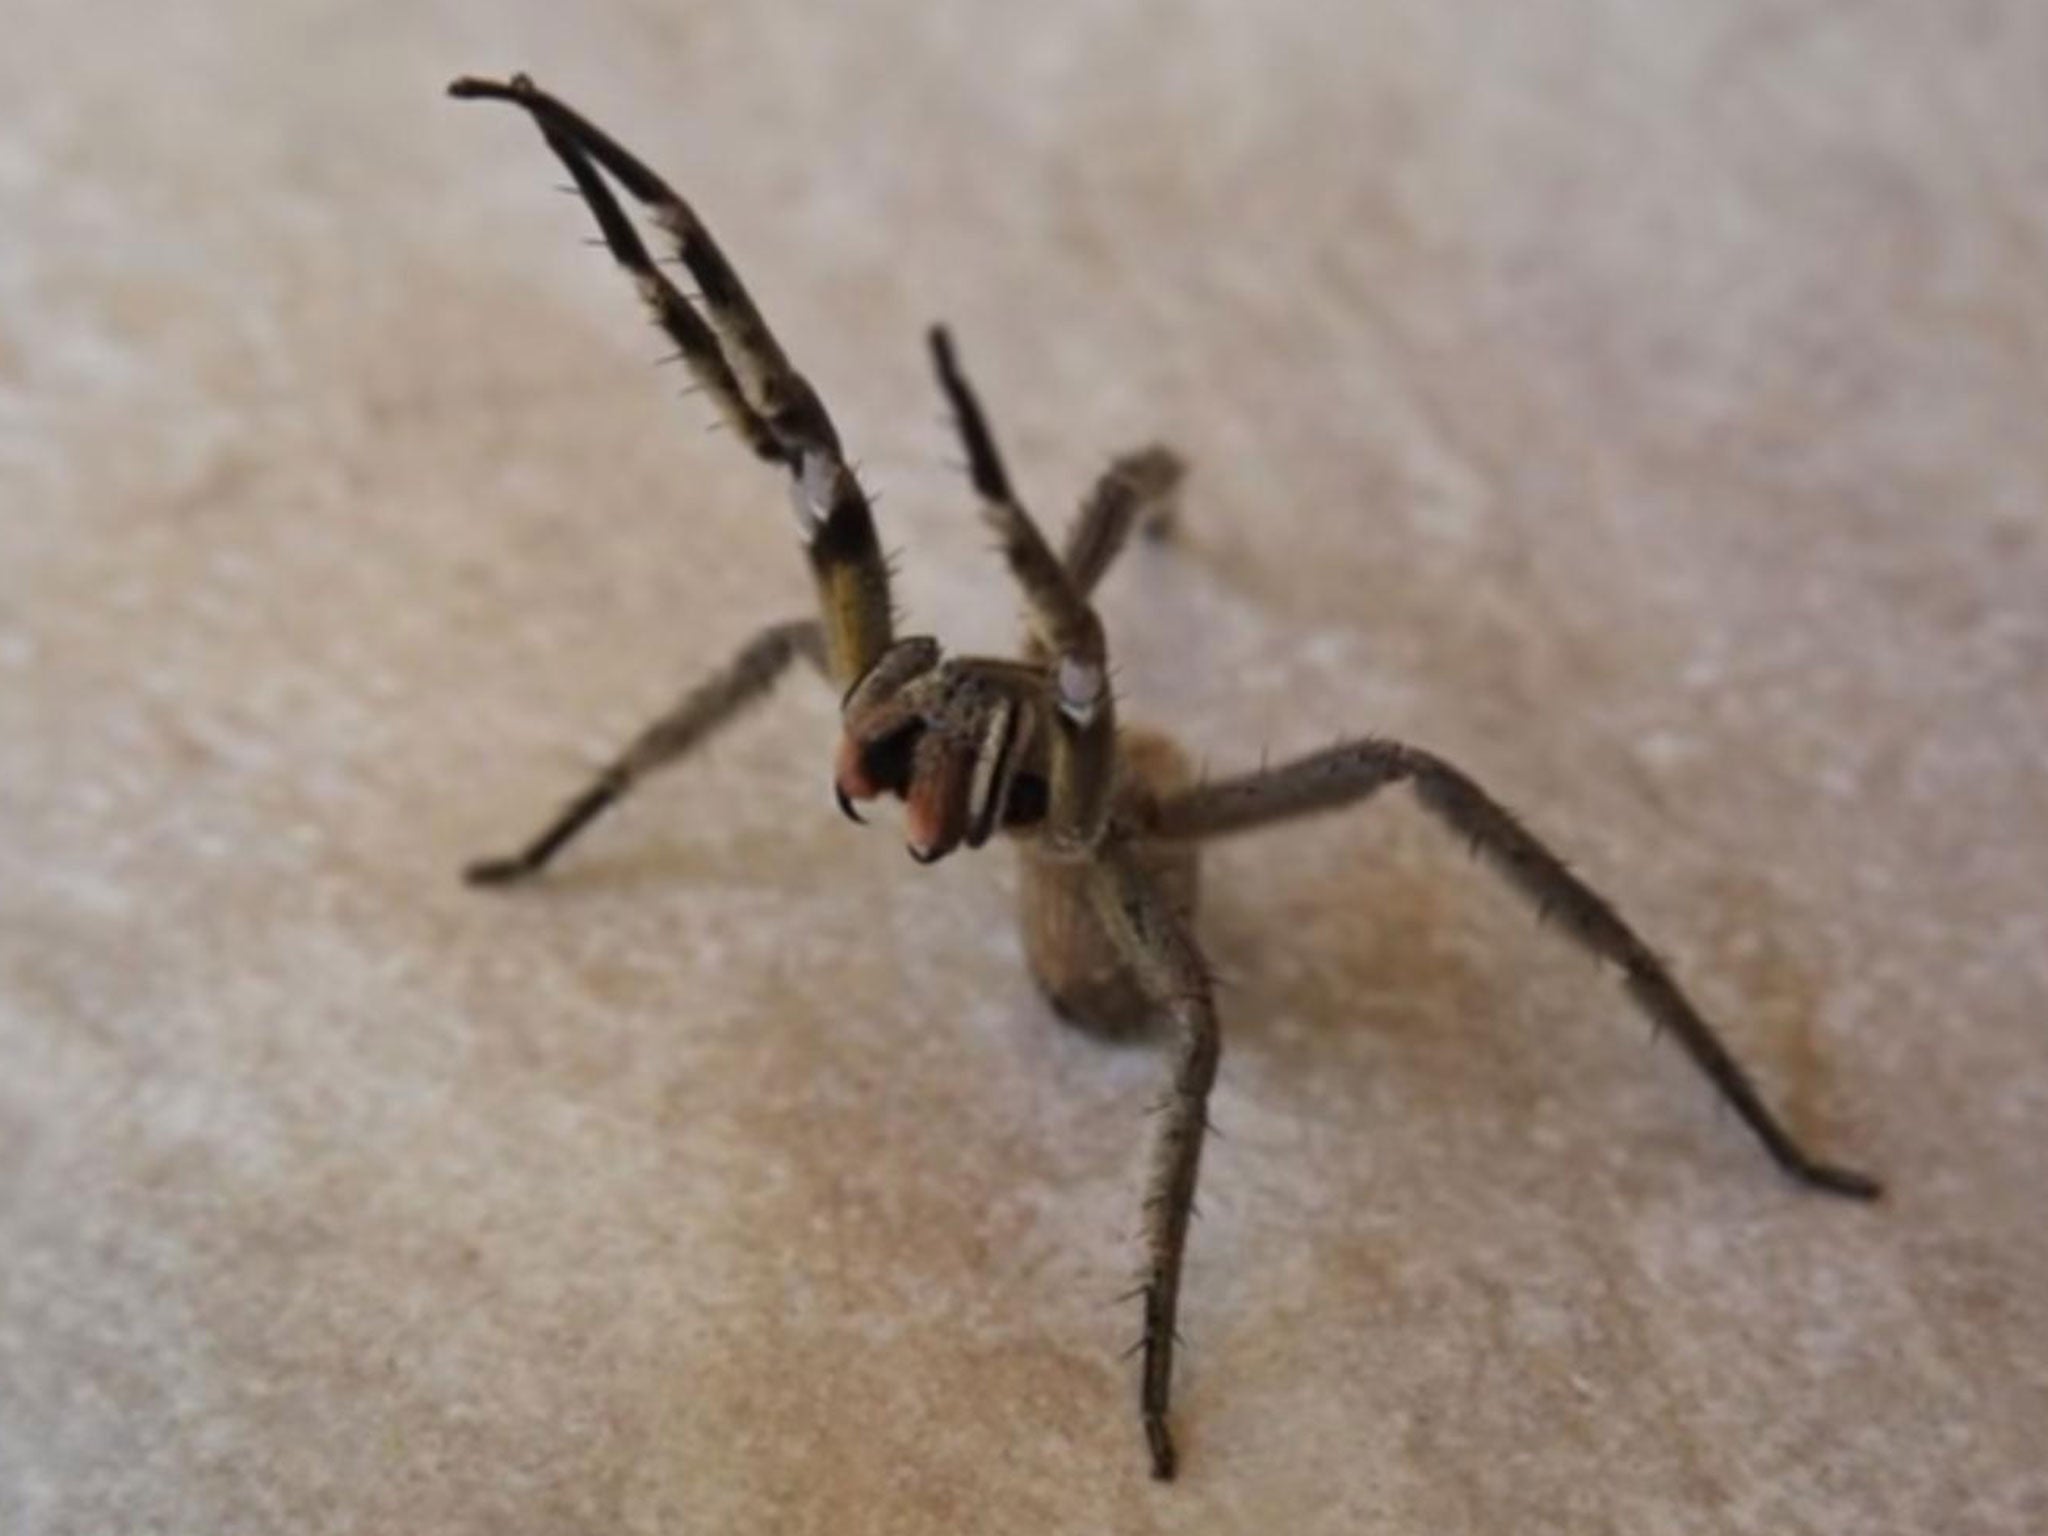 A Brazilian wandering spider filmed in Costa Rica